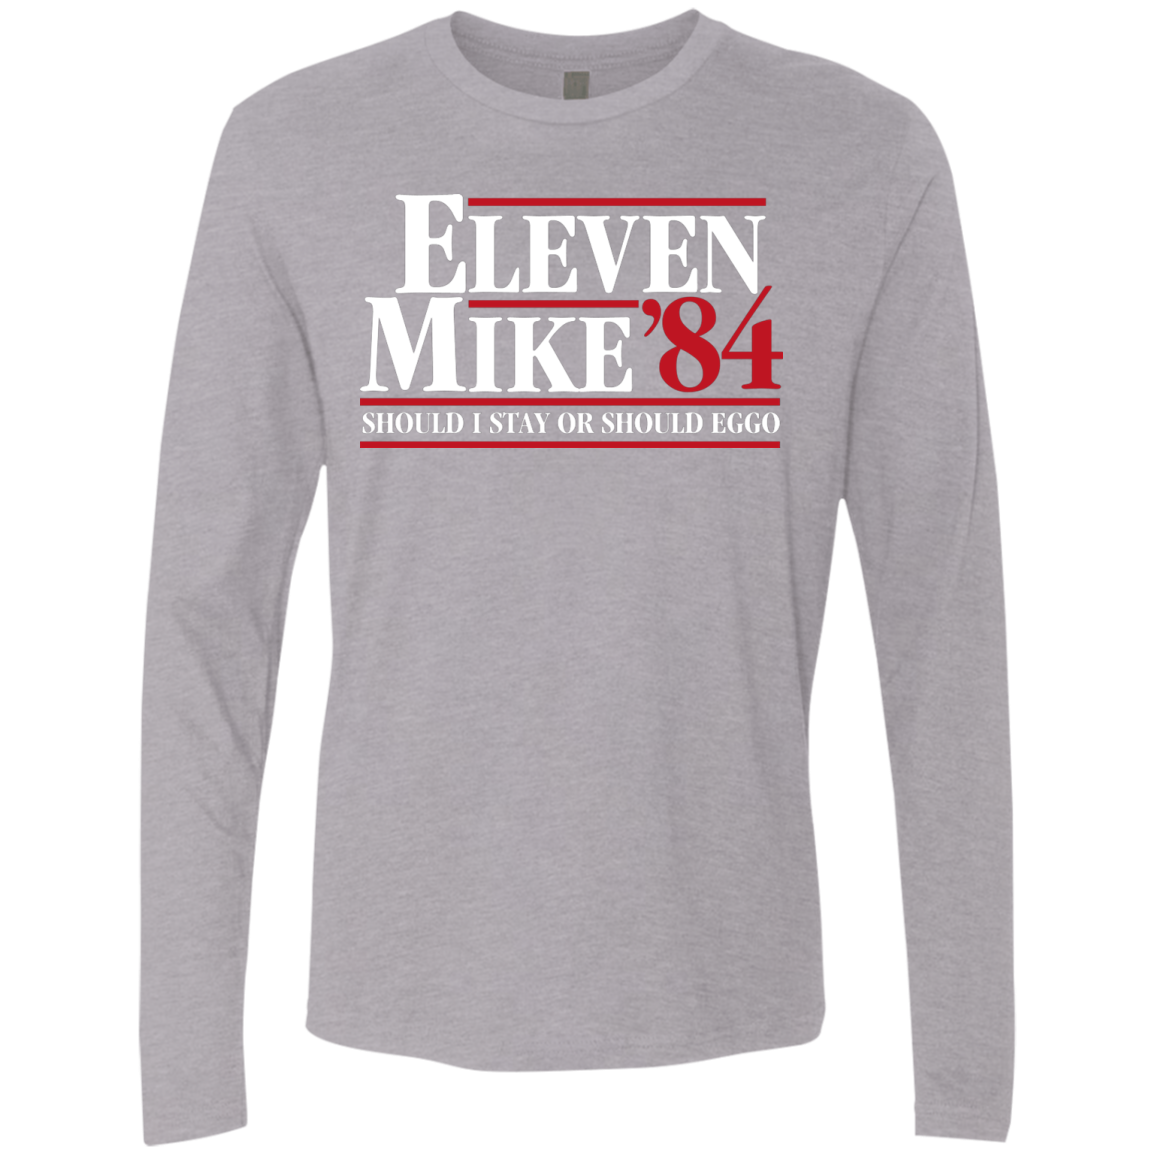 Eleven Mike 84 - Should I Stay or Should Eggo Men's Premium Long Sleeve